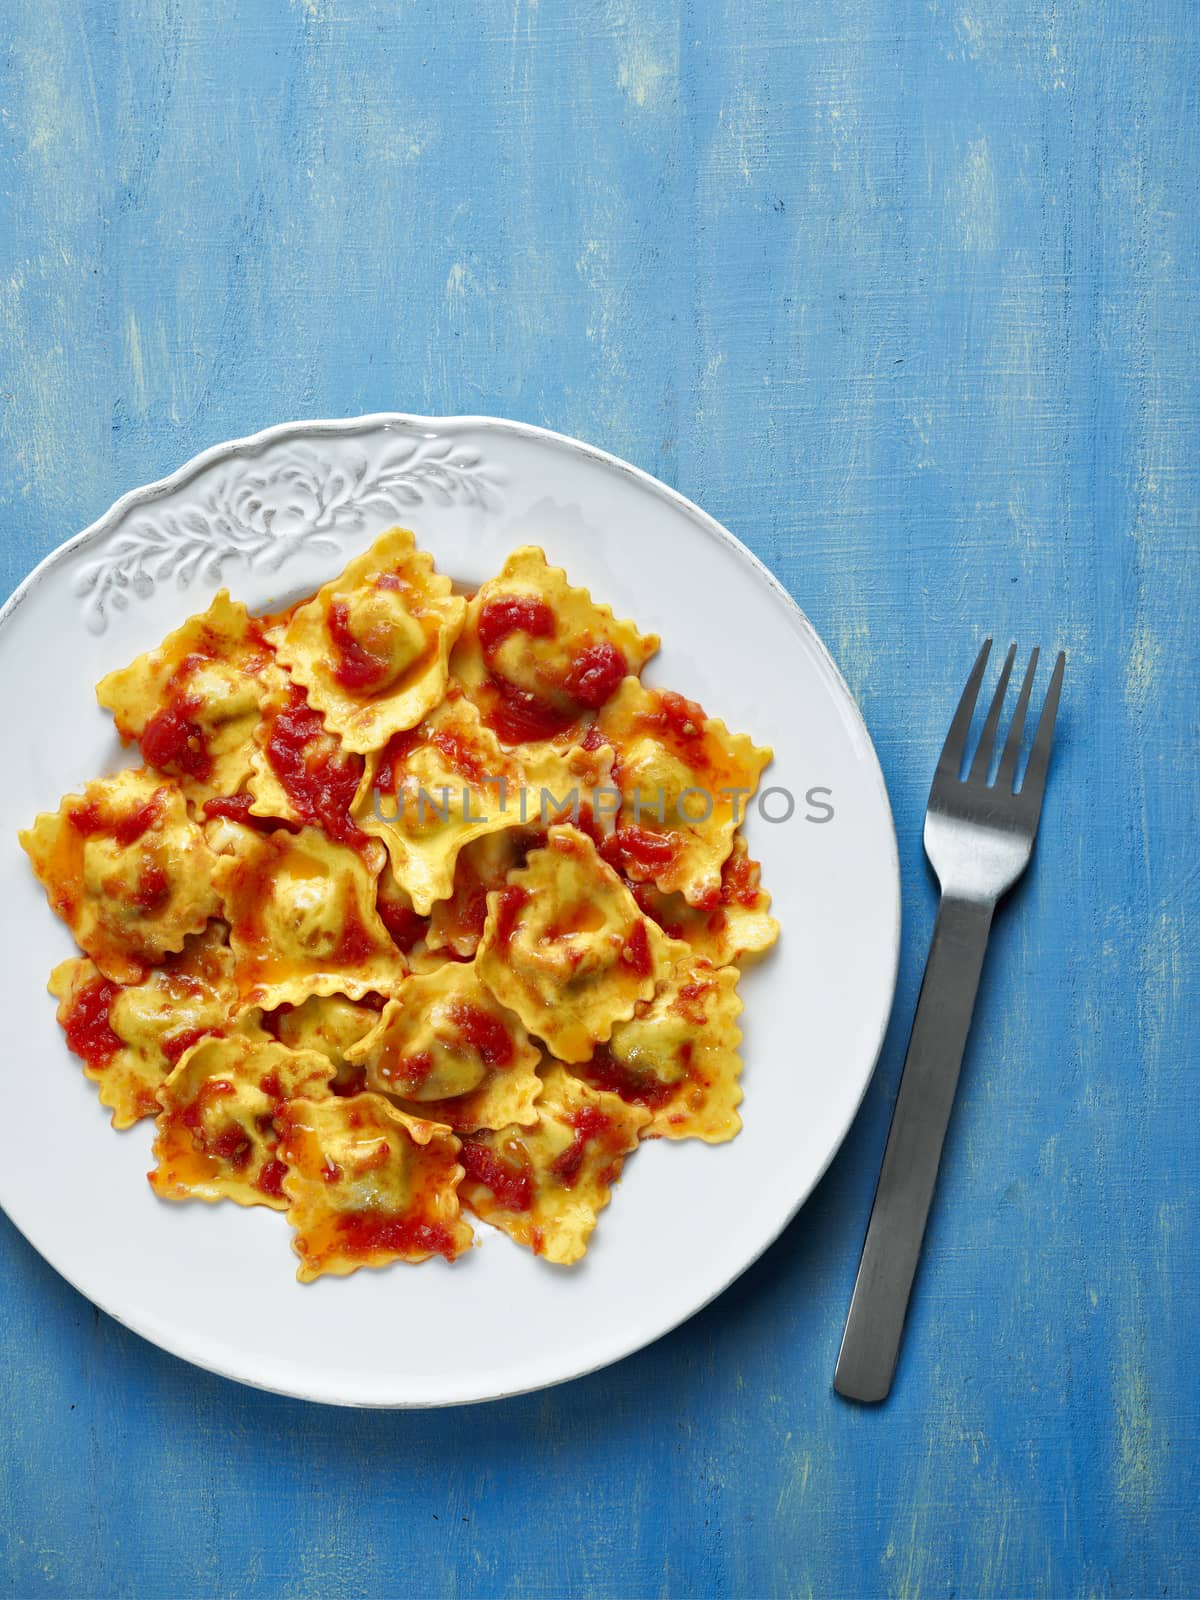 close up of a plate of italian ravioli pasta in tomato sauce